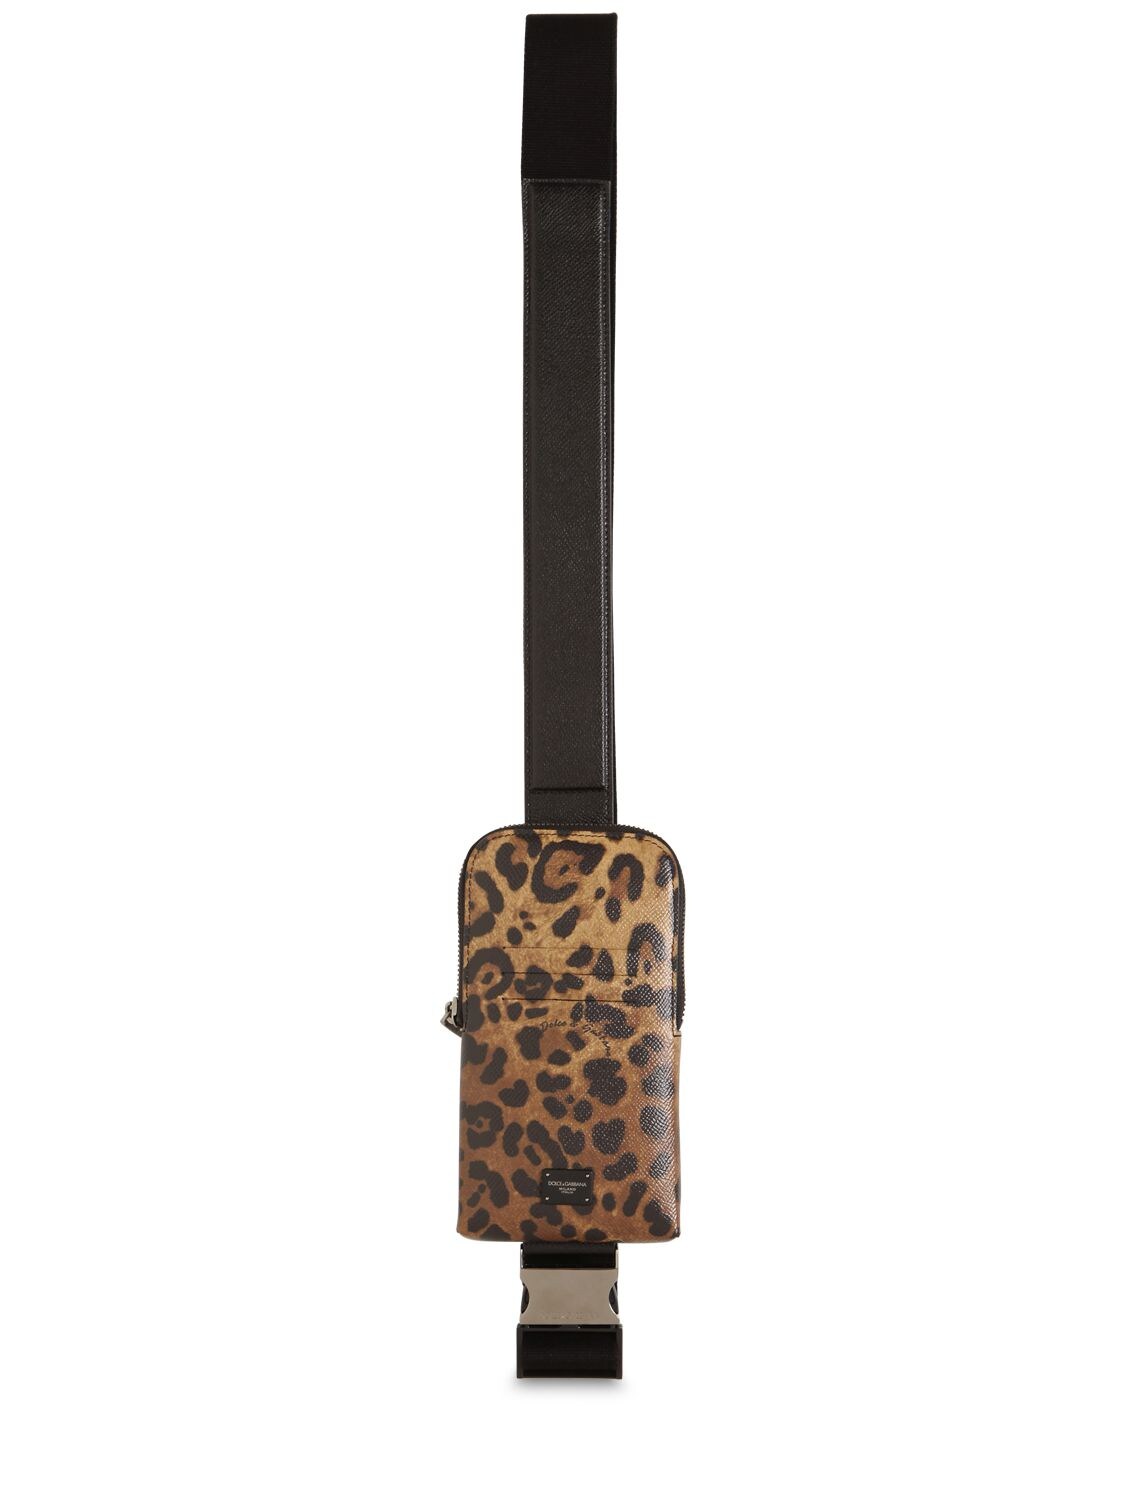 Dolce & Gabbana Leopard Print Leather Smartphone Case In Brown